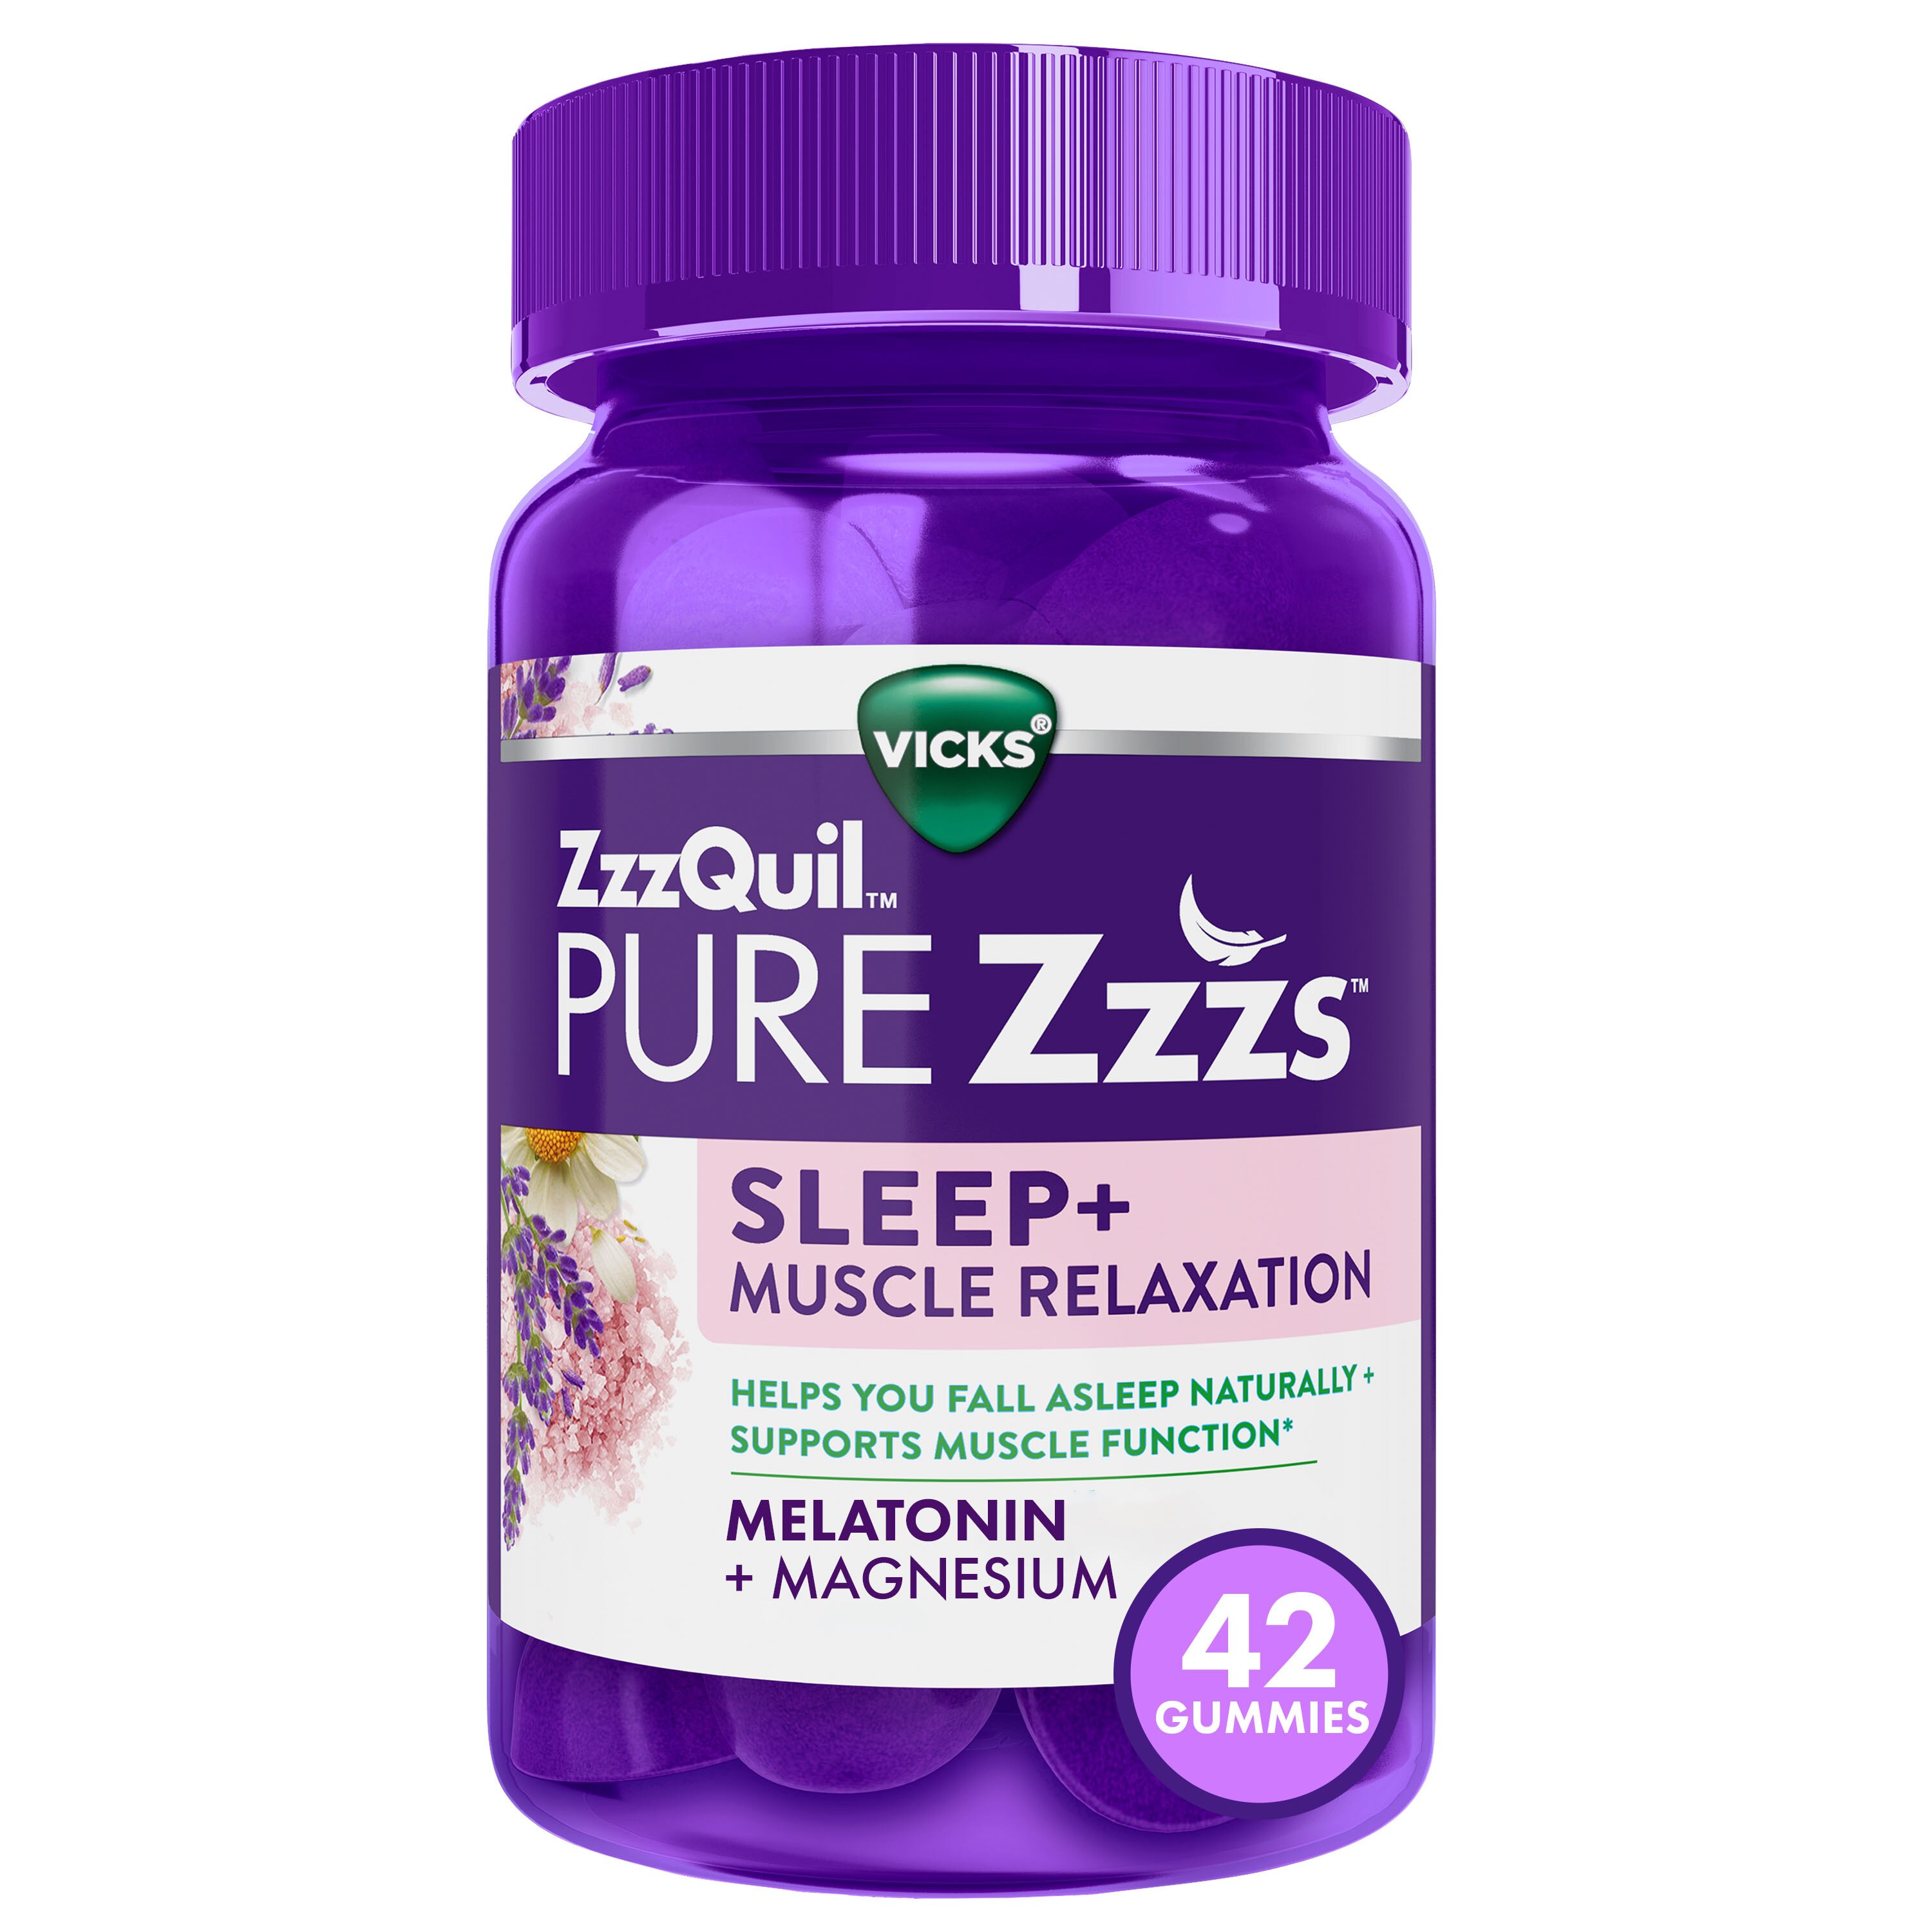 ZzzQuil PURE Zzzs Sleep+ Muscle Relaxation Melatonin Sleep Aid Gummies, 42CT